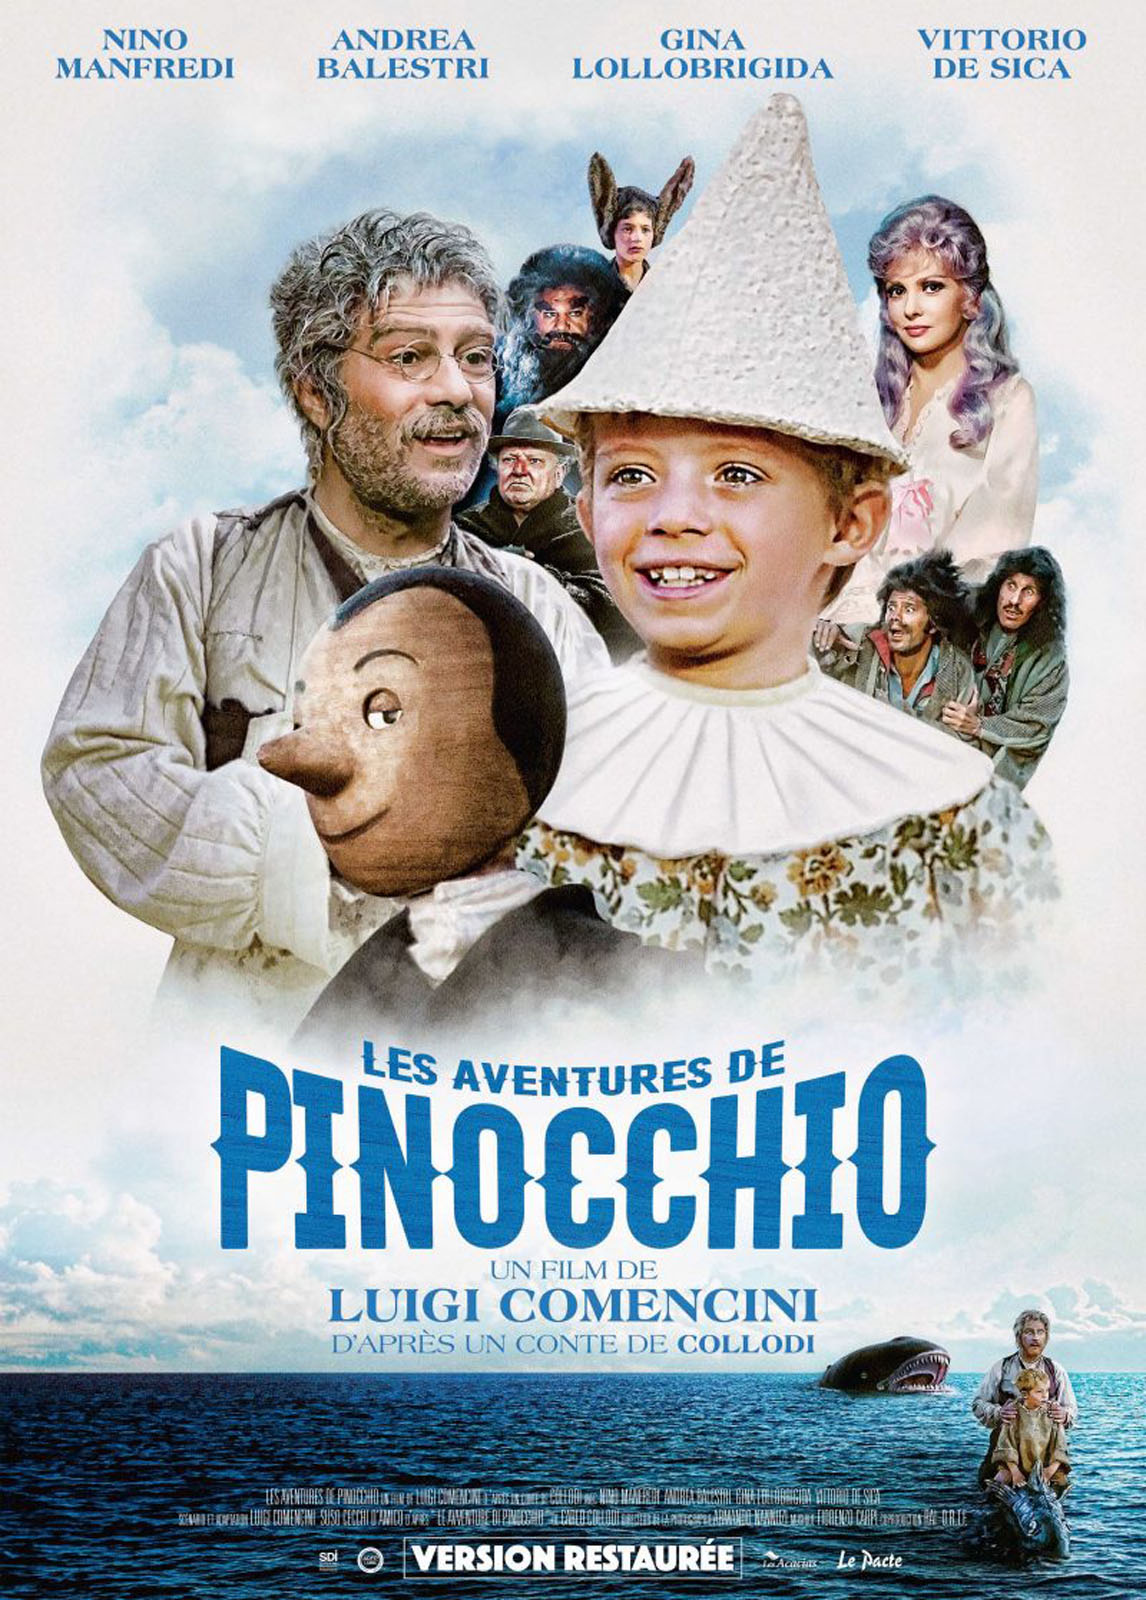 Pinnocchio